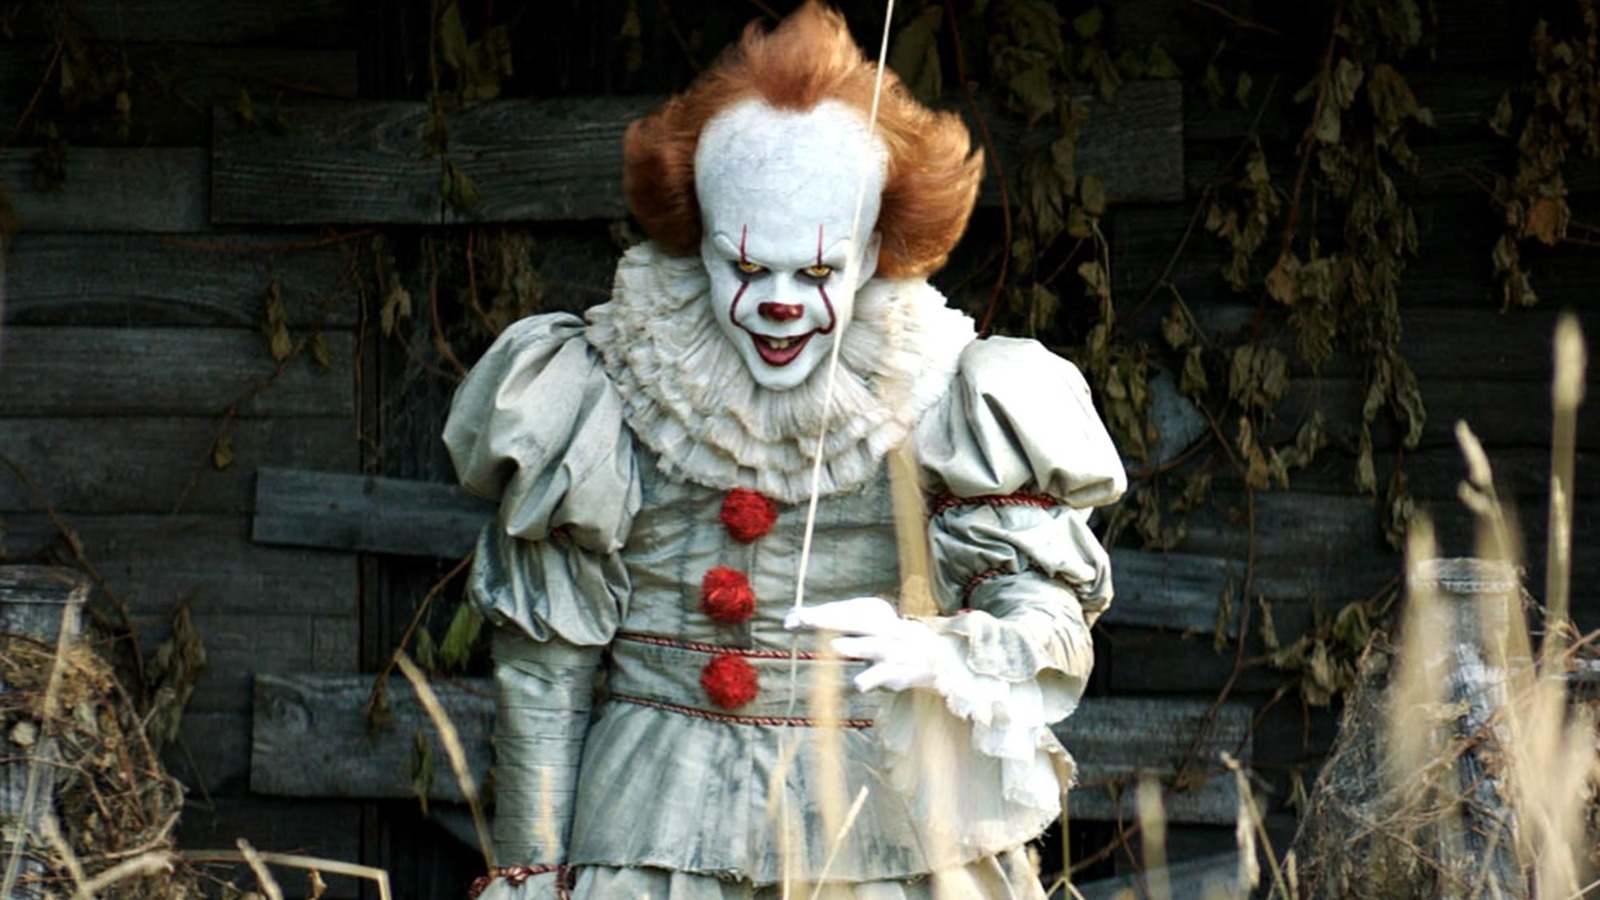 Movie review: Fear wears a creepy clown face in 'It